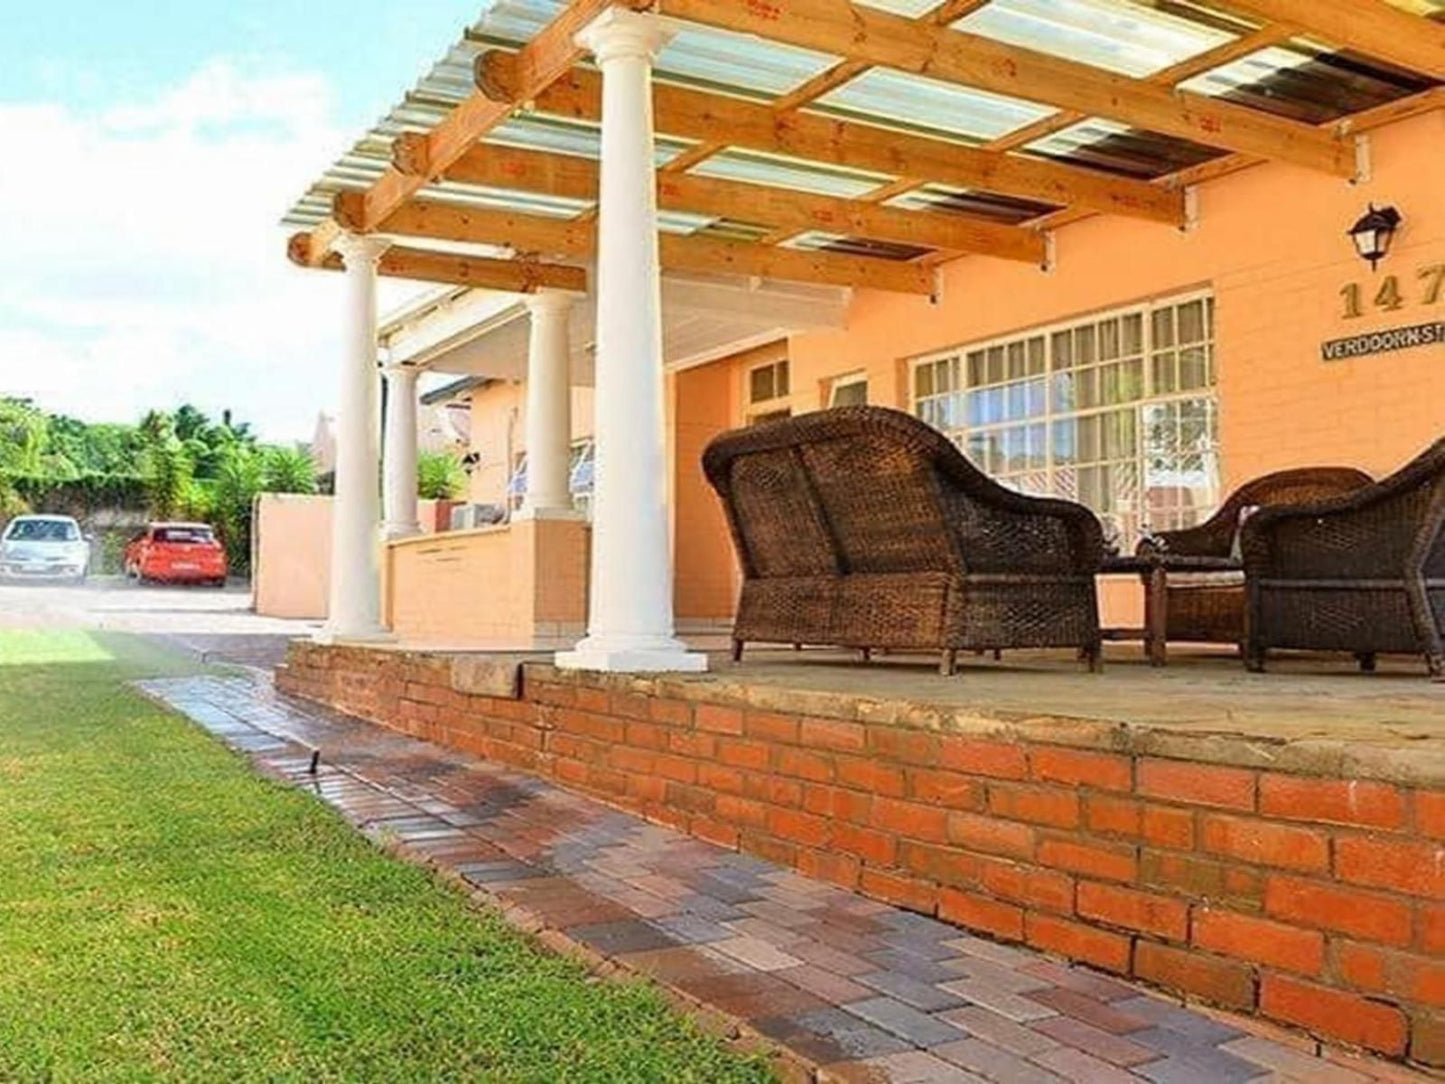 Tshinakie Guesthouse Sunnyside Pretoria Tshwane Gauteng South Africa House, Building, Architecture, Brick Texture, Texture, Living Room